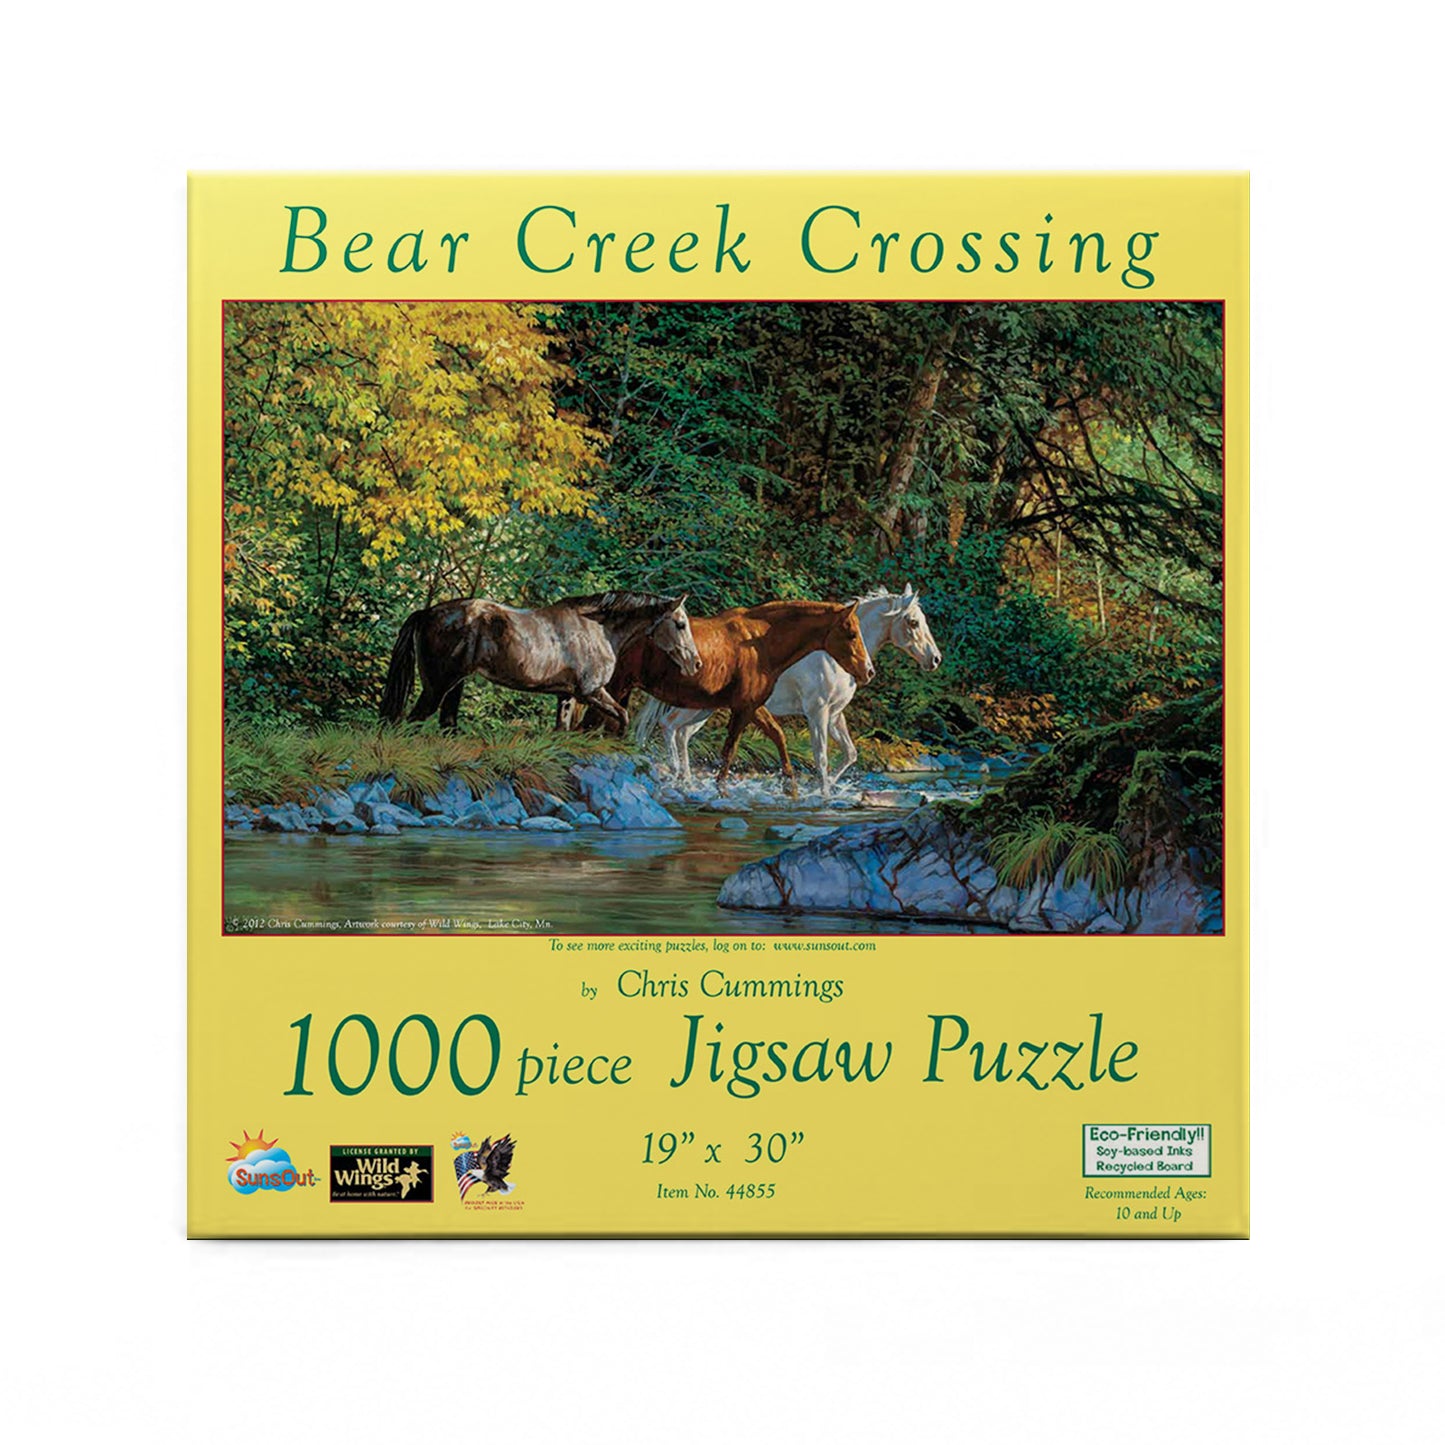 Bear Creek Crossing (16) - 1000 Piece Jigsaw Puzzle